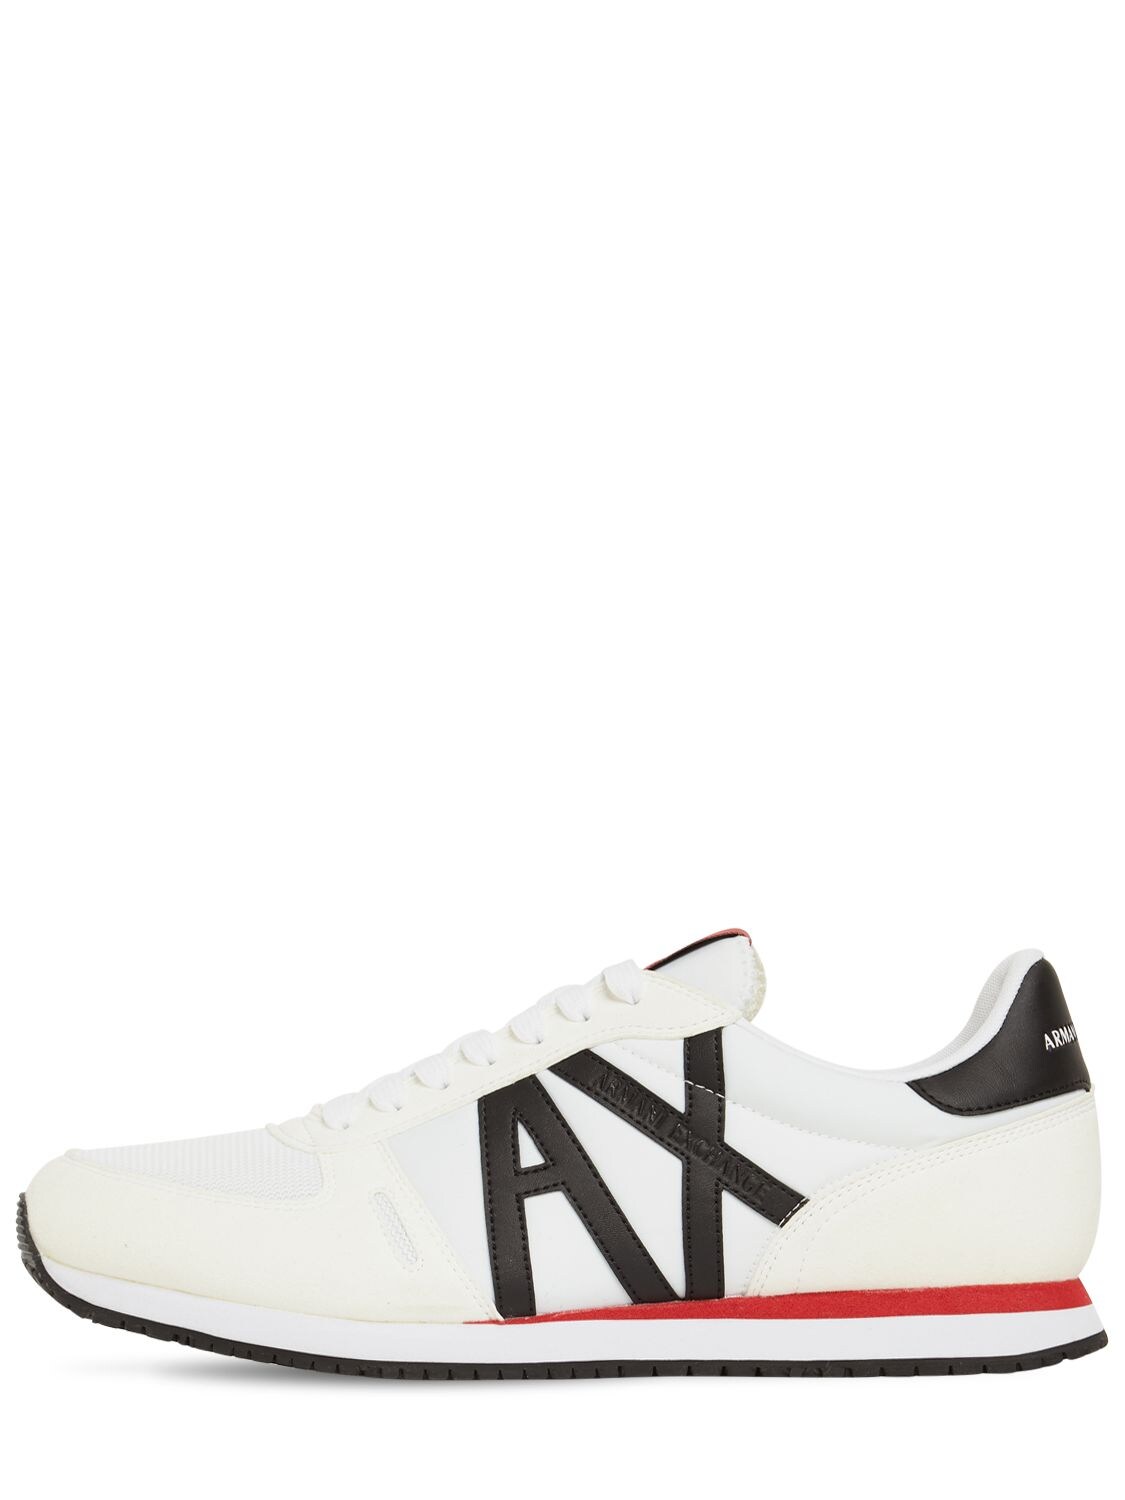 Armani Exchange Logo Tech Low Top Sneakers In White,red,black | ModeSens